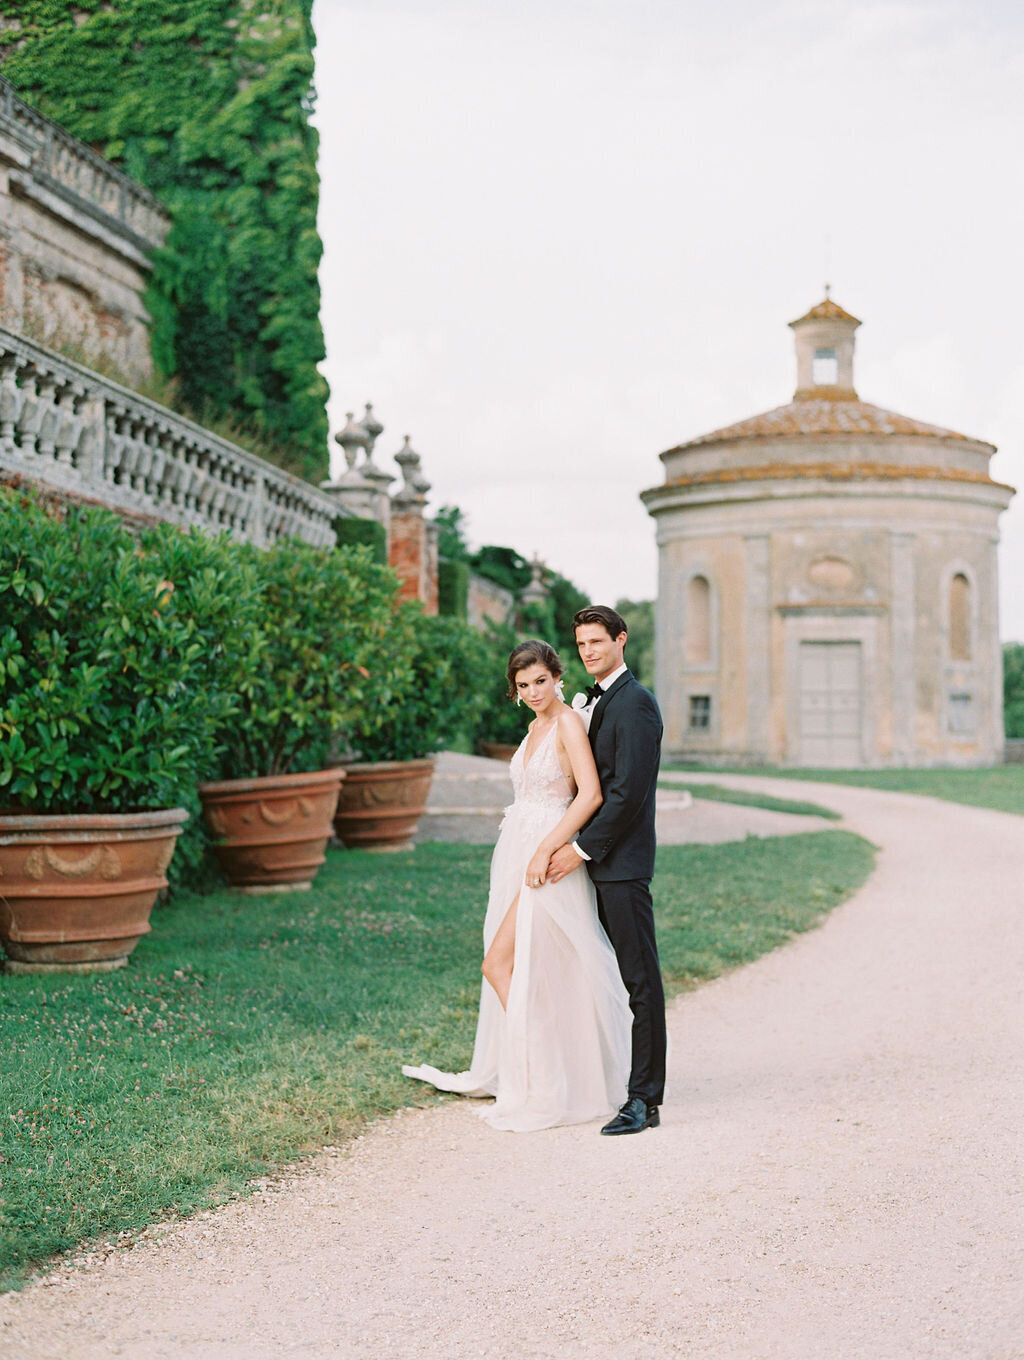 Trine_Juel_hair_and_makeupartist_wedding_Italy_Castello_Di_CelsaQuicksallPhotography_CastelloDiCelsa0452